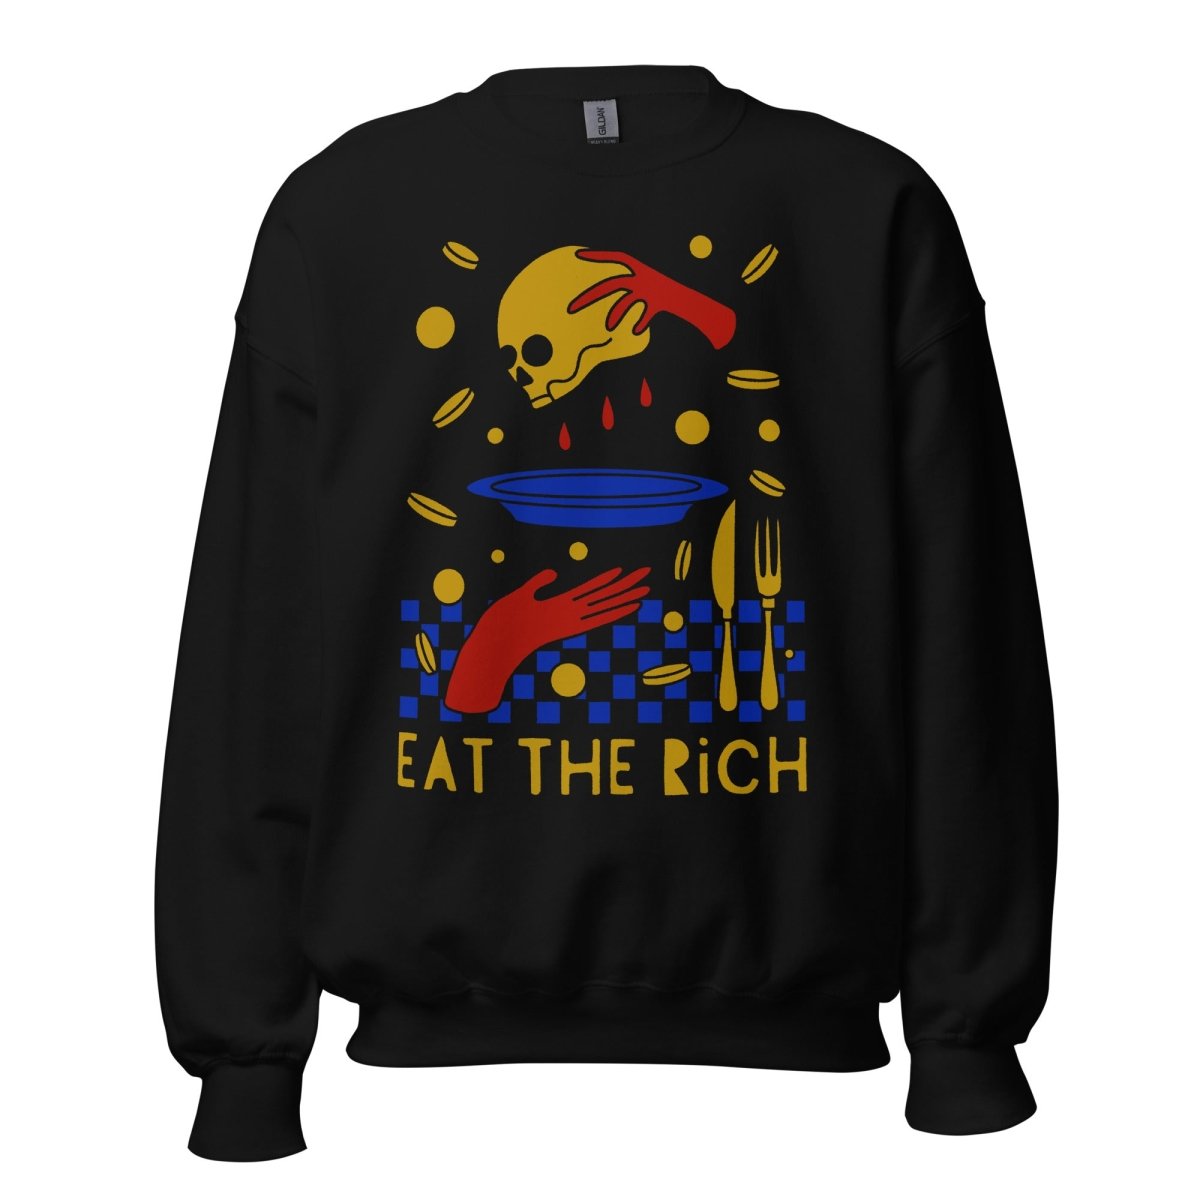 Eat the rich sweatshirt - Sweatshirt - Pretty Bad Co.